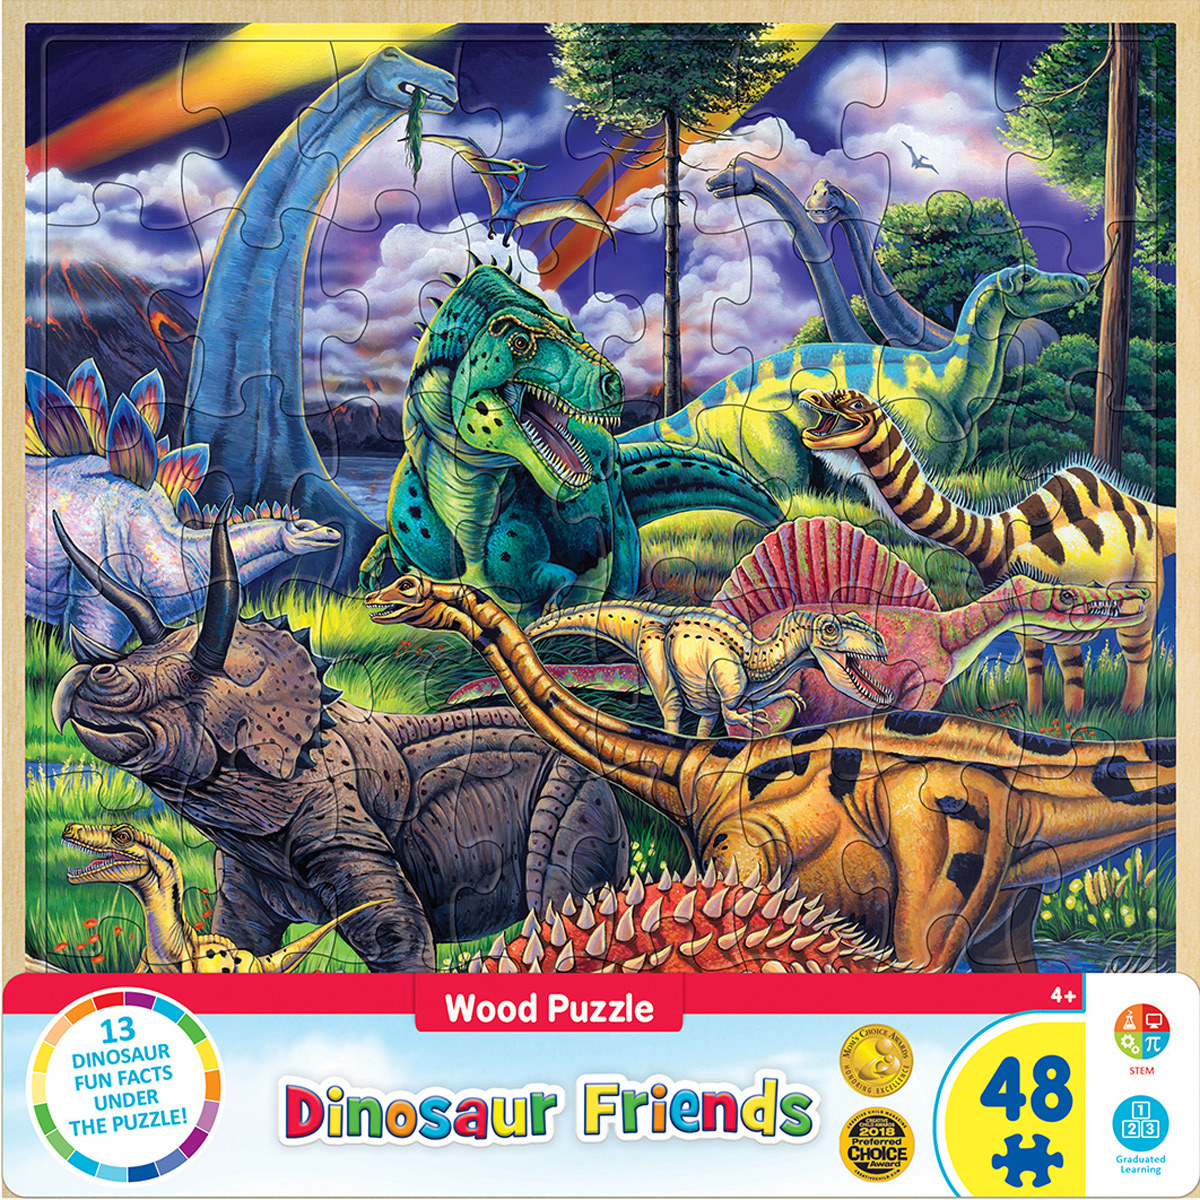 Wood Fun Facts - Dinosaur Friends